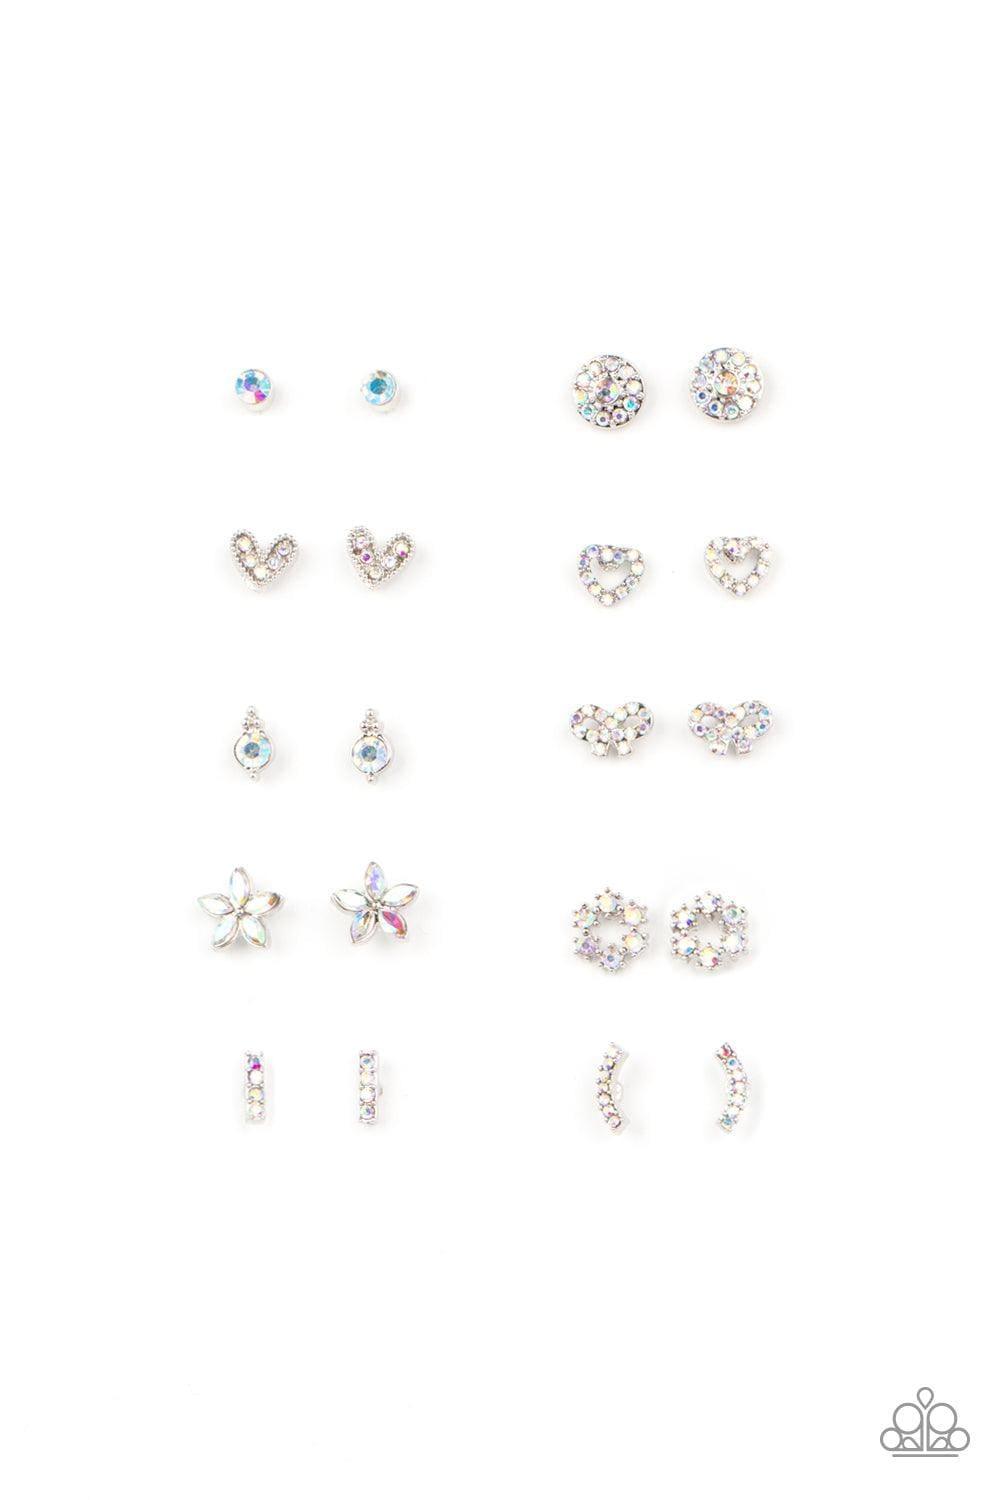 Paparazzi Accessories - Paparazzi Starlet Shimmer Jewelry - Dainty Earrings - Bling by JessieK